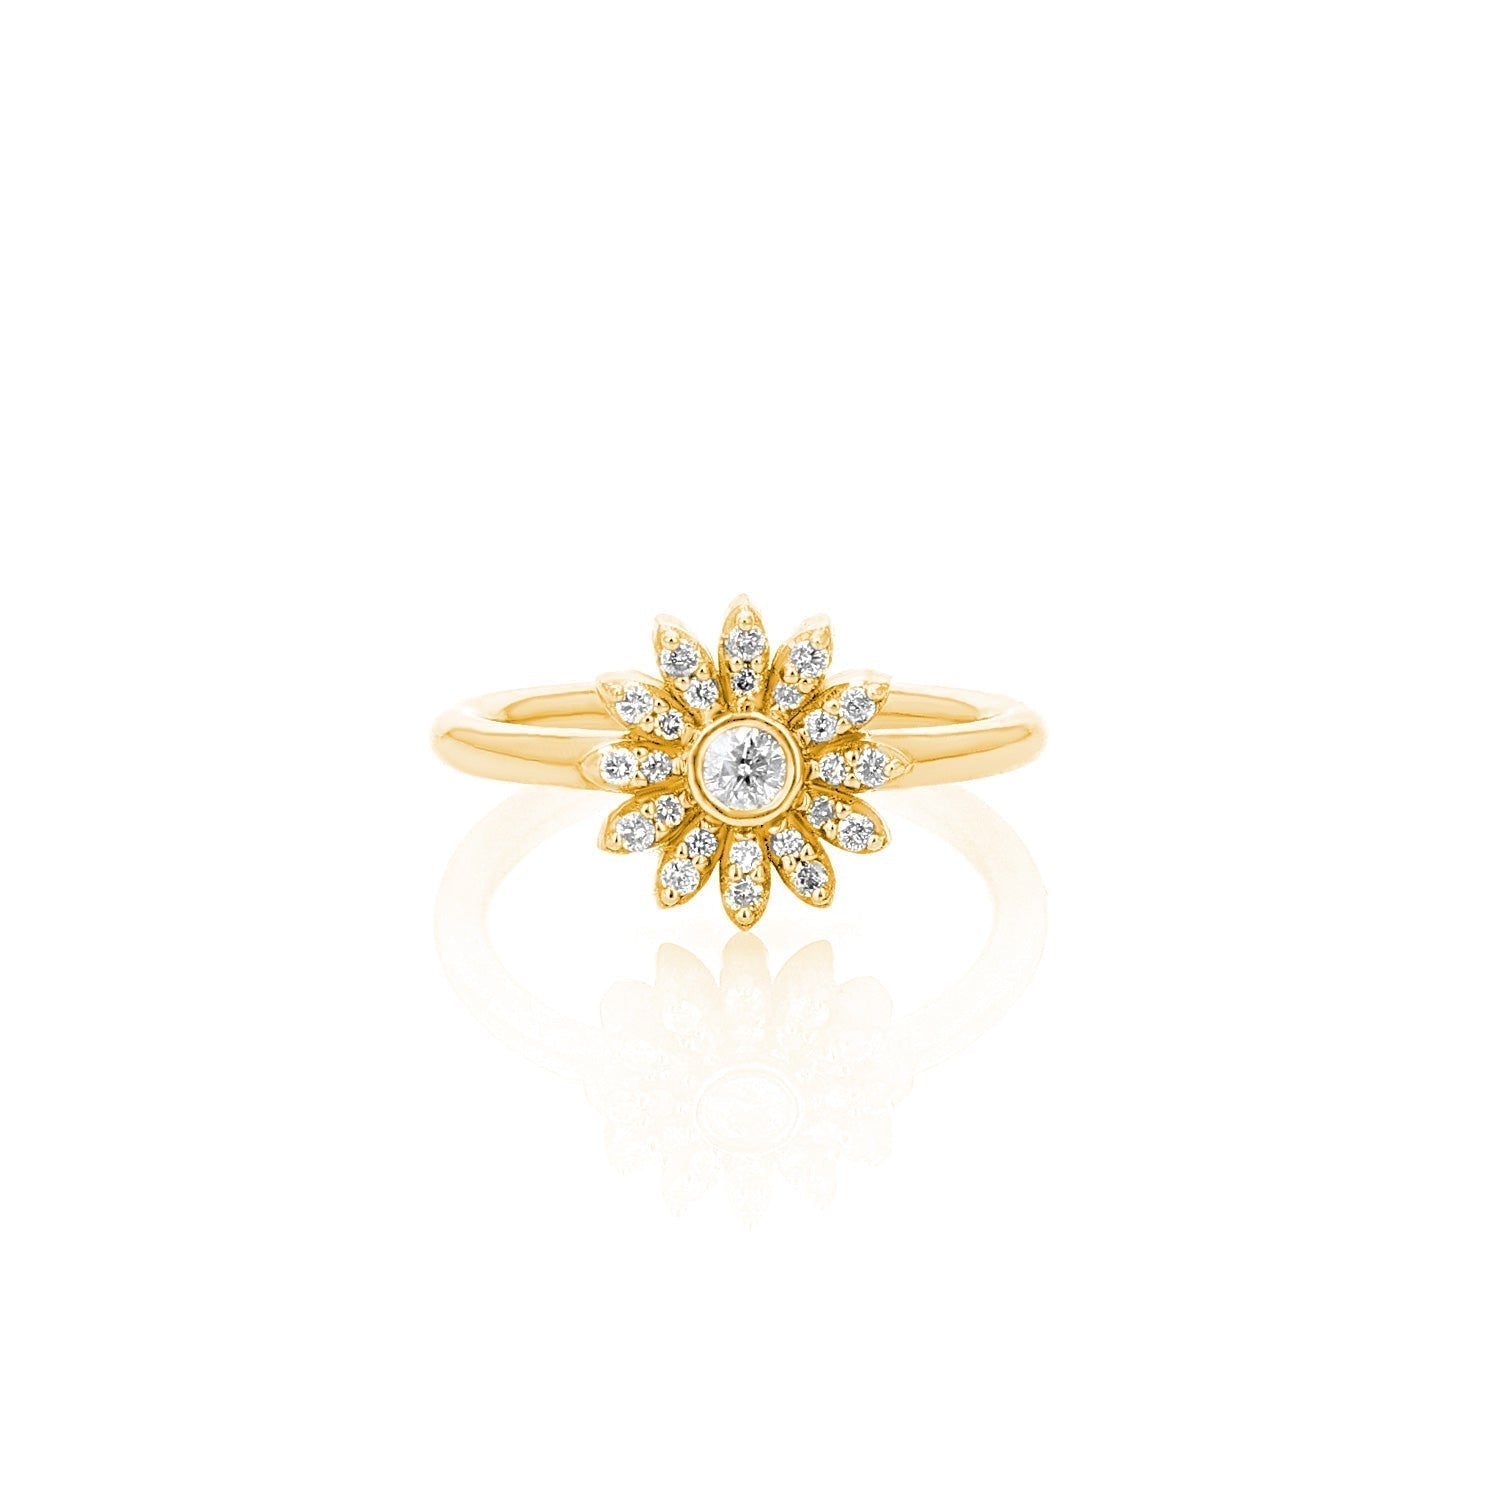 14k Petite Pave Daisy Ring with Bezel Diamond Center  RG145 - TBird